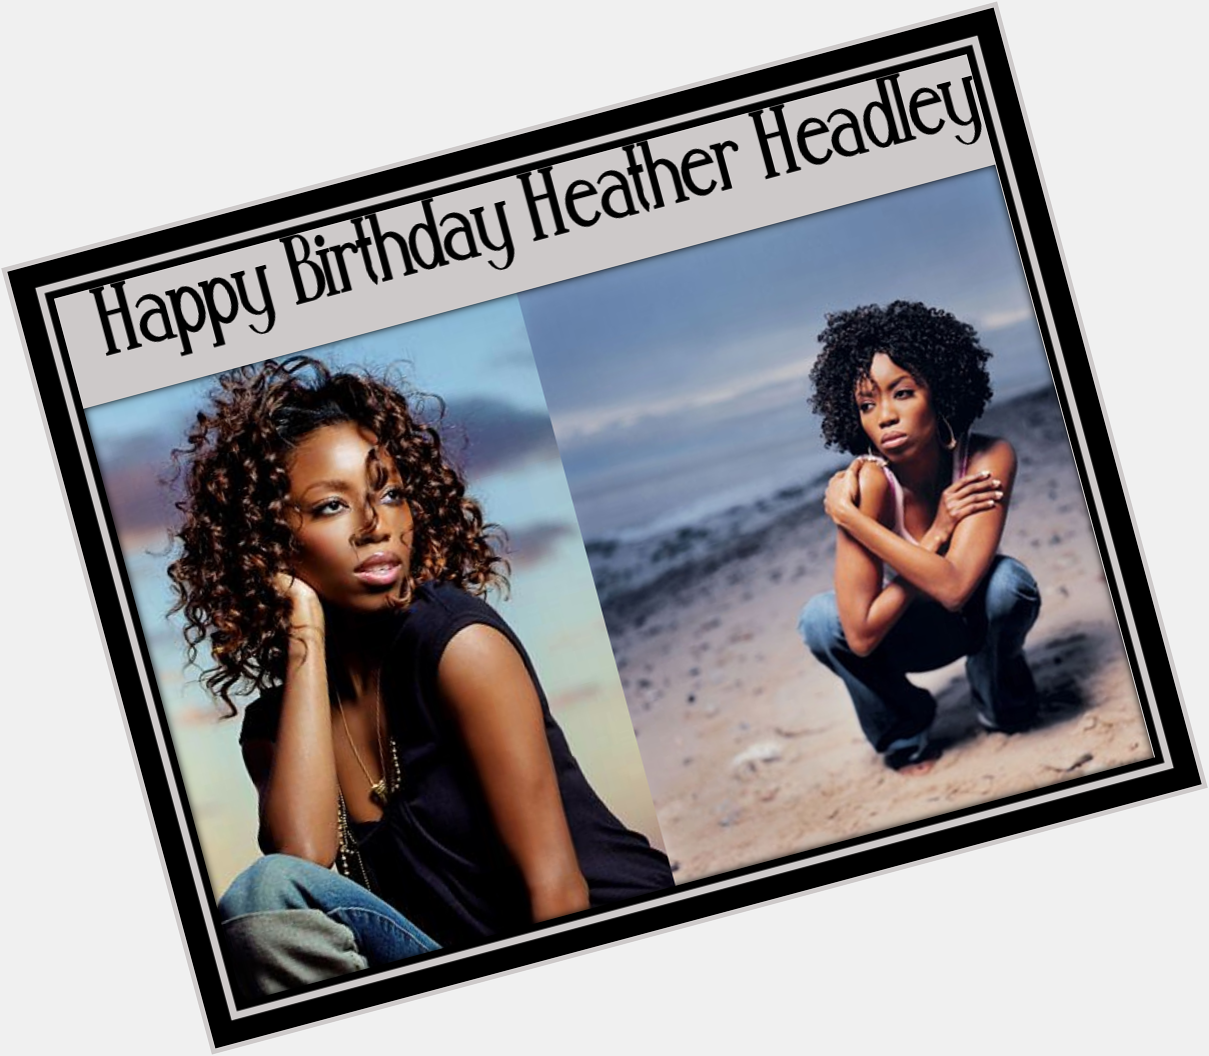 Happy Birthday Heather Headley 